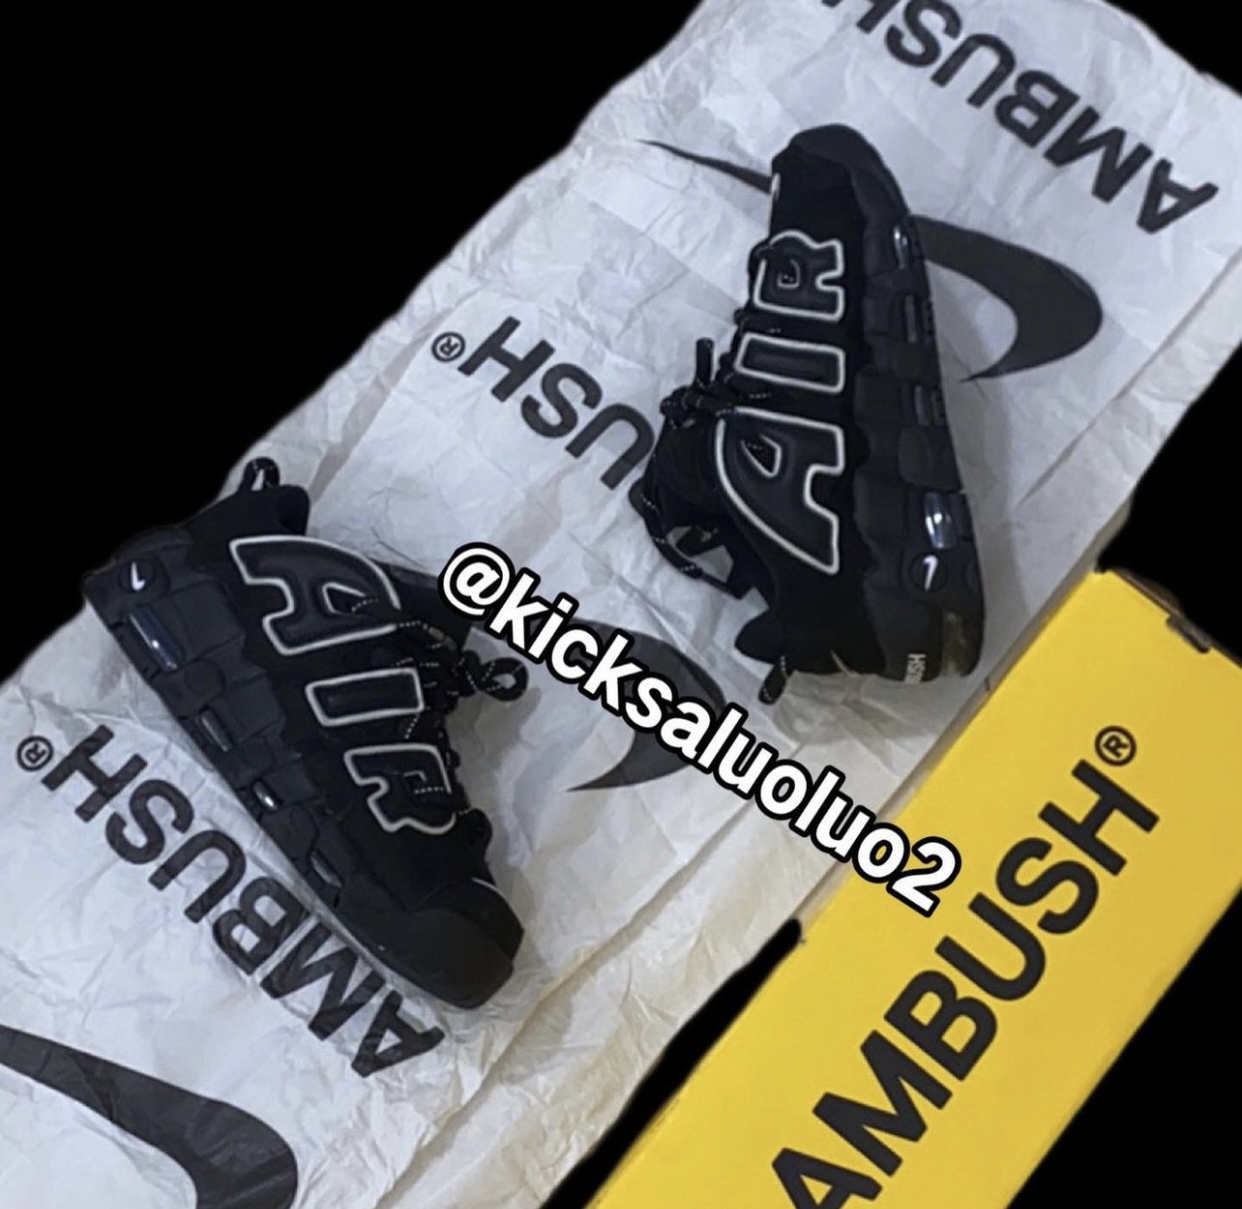 AMBUSH Nike Air More Uptempo Low Black White Packaging